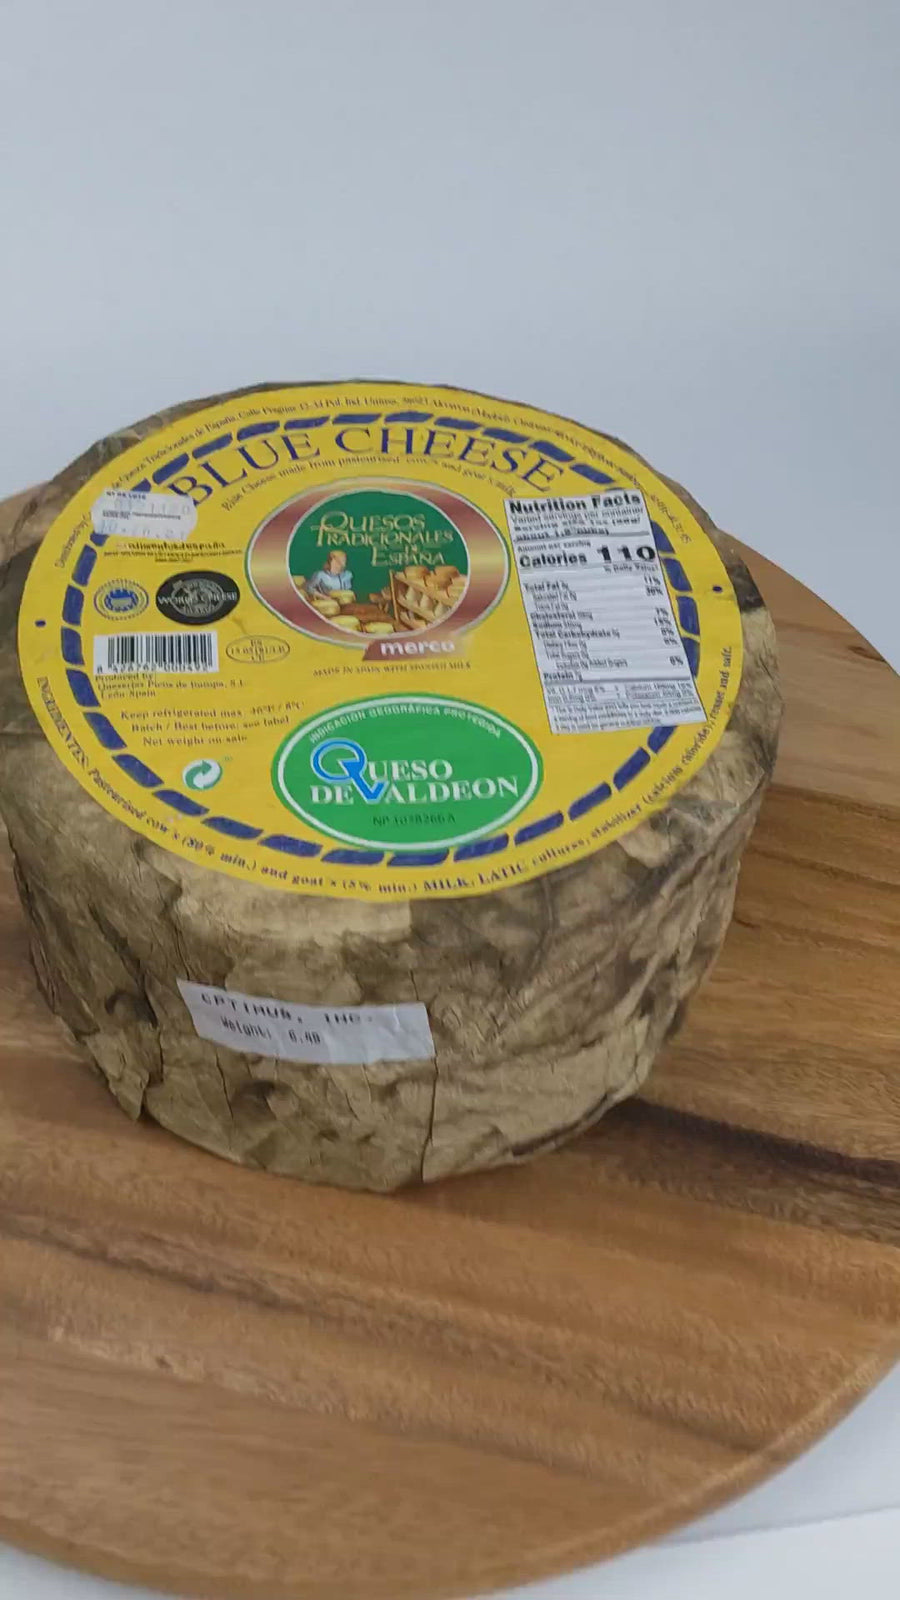 QUESO DEVALDEON Blue Cheese.mp4